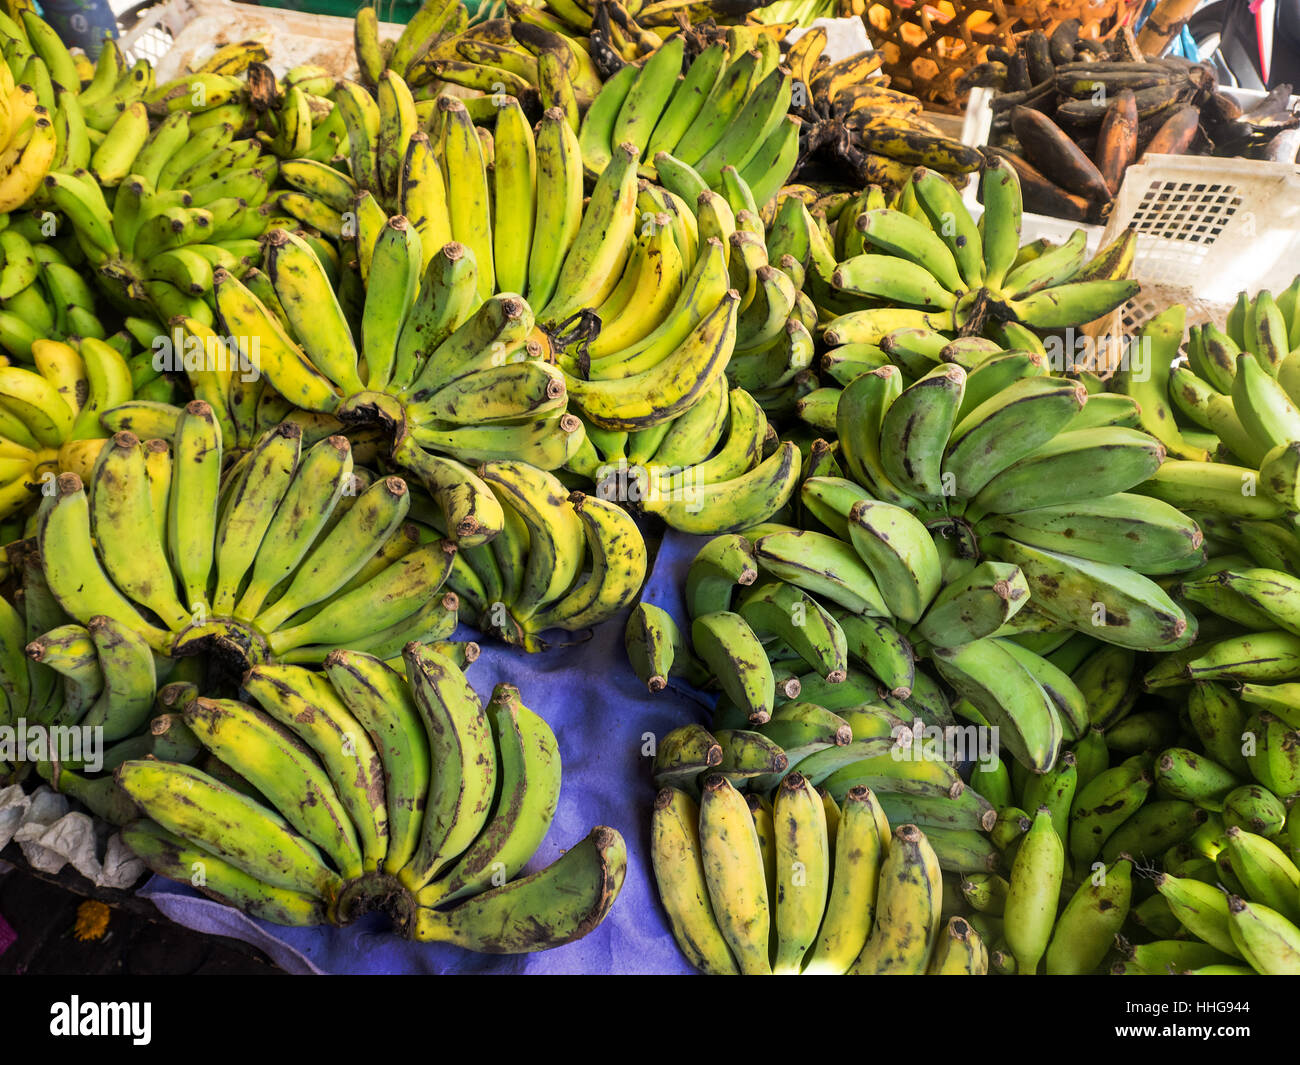 Kochbananen, die Lebensmittel Obst Kochen Braten Braten gelbe Yummi Stil stilvolle neue Banane-da-Terra Kochen Banane, Gemüse kochen Stockfoto